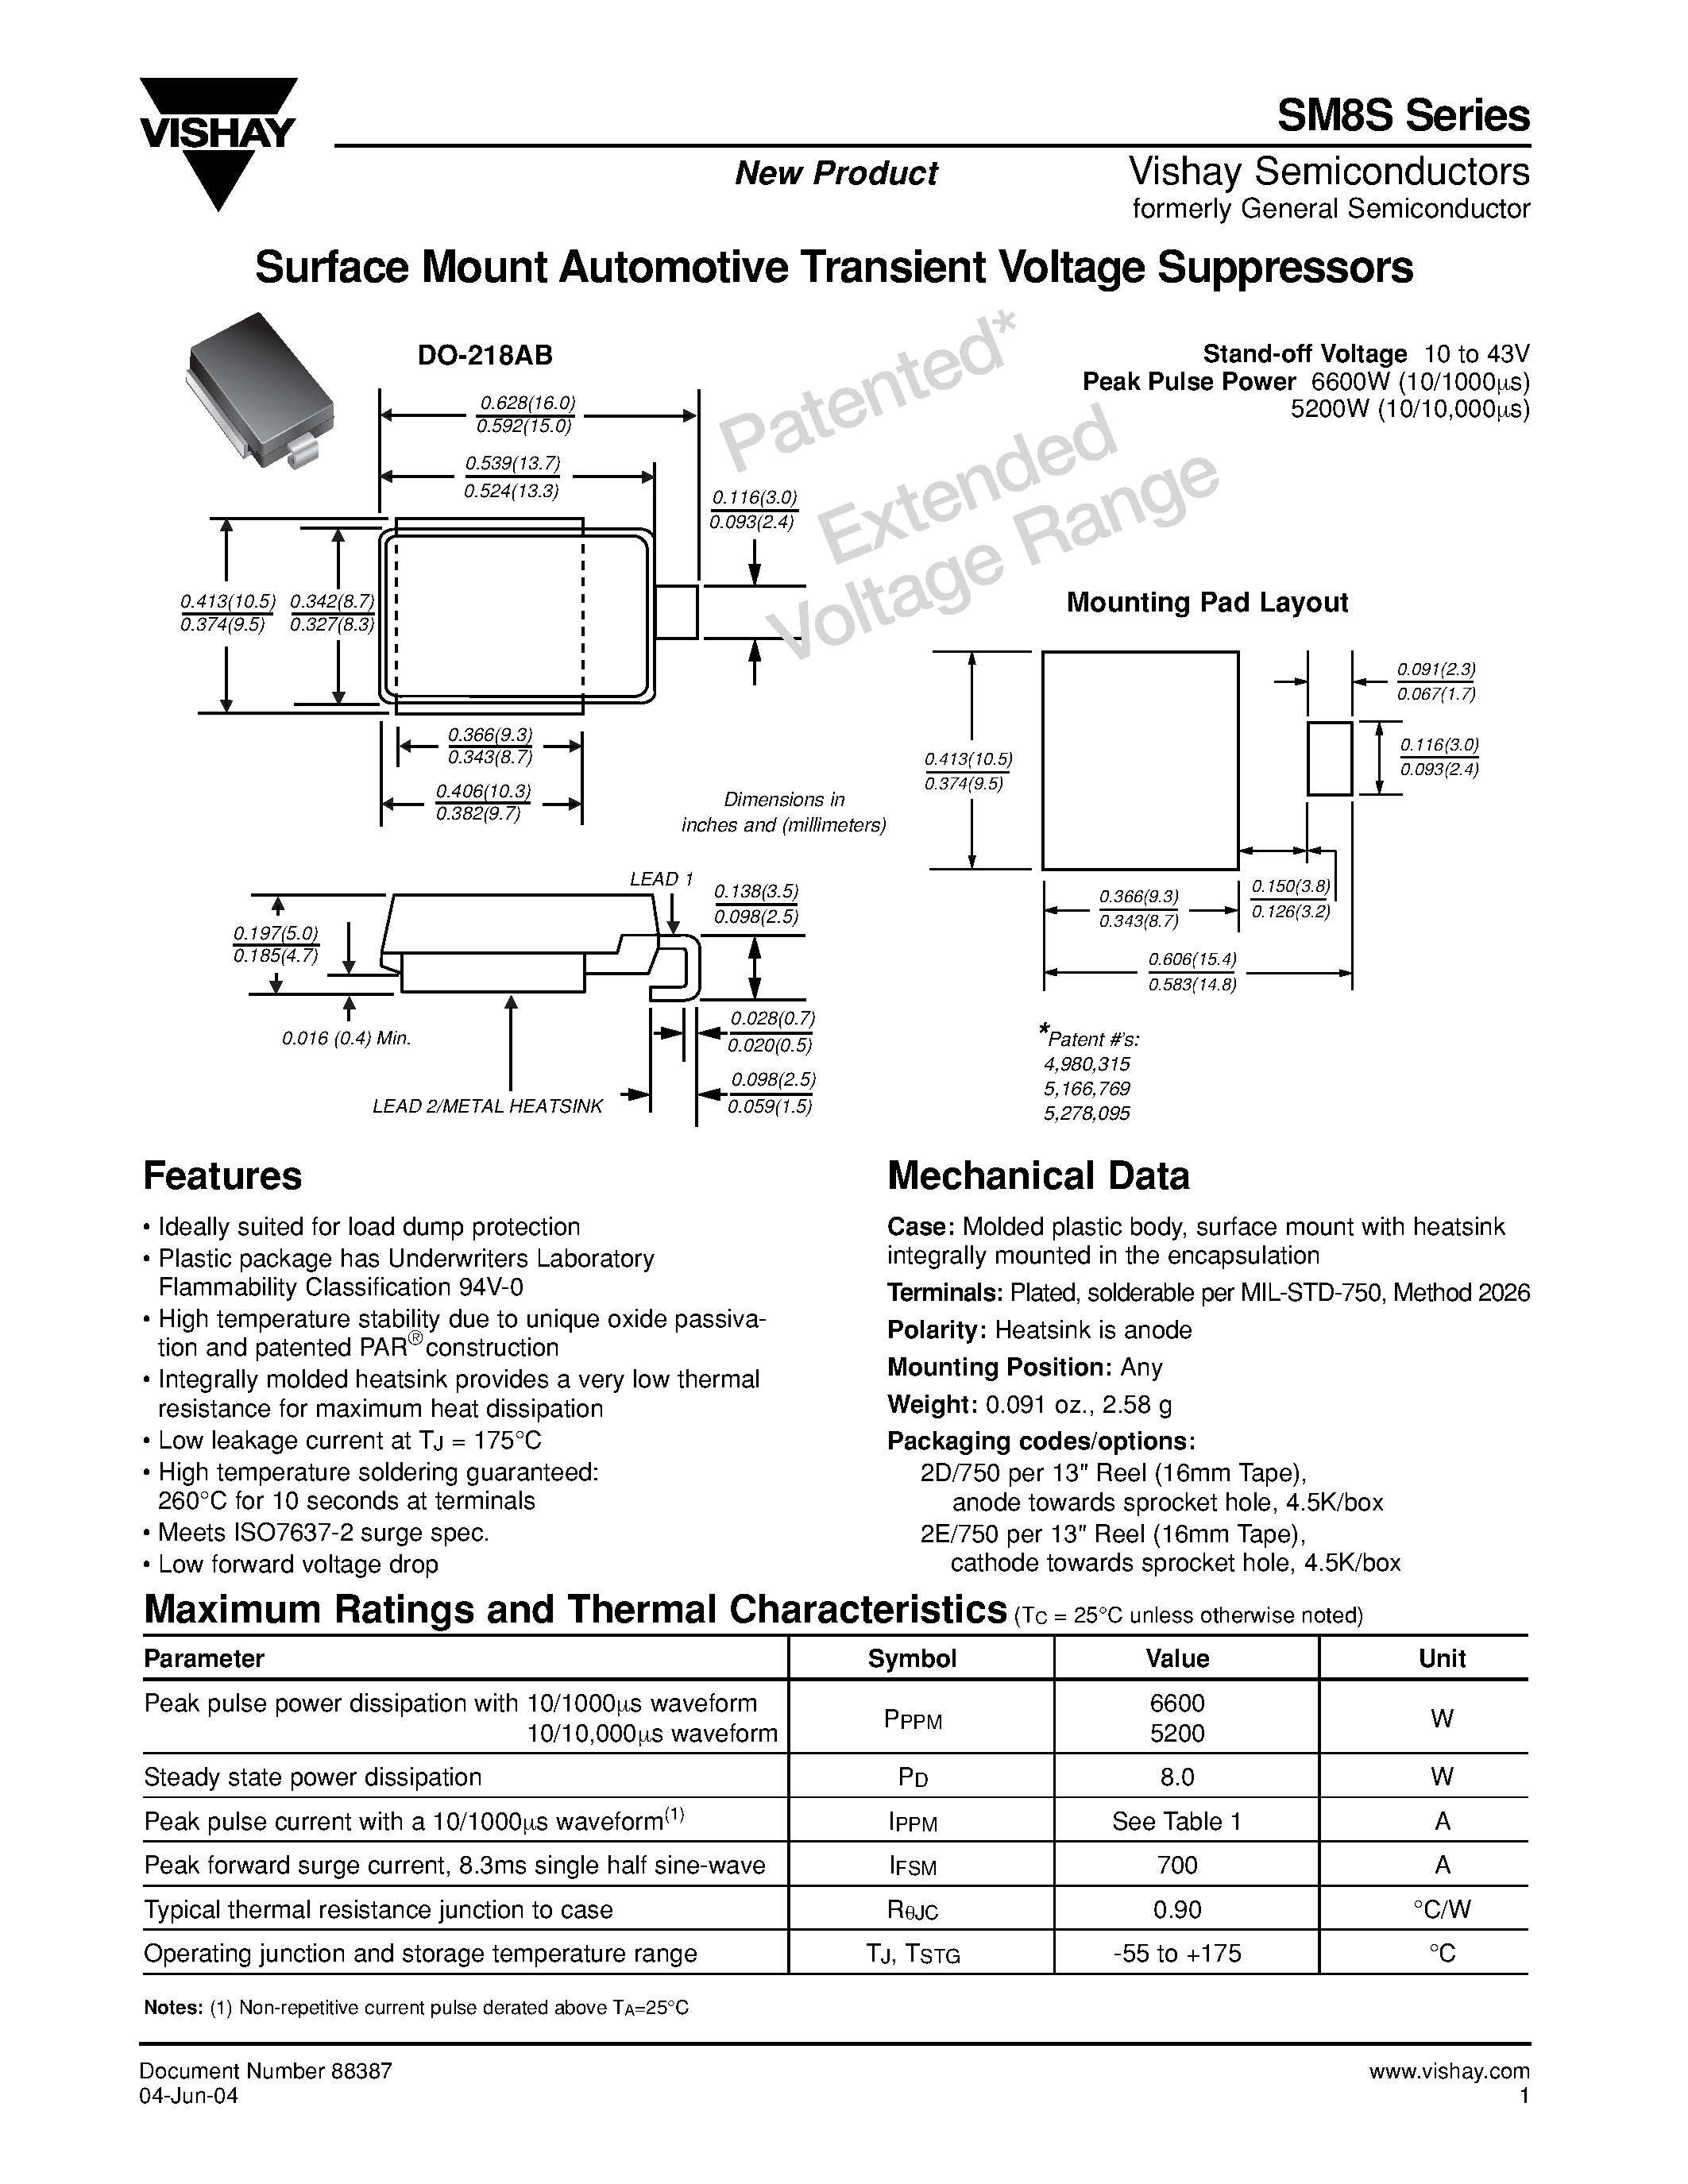 Даташит SM8S15A - Surface Mount Automotive Transient Voltage Suppressors страница 1